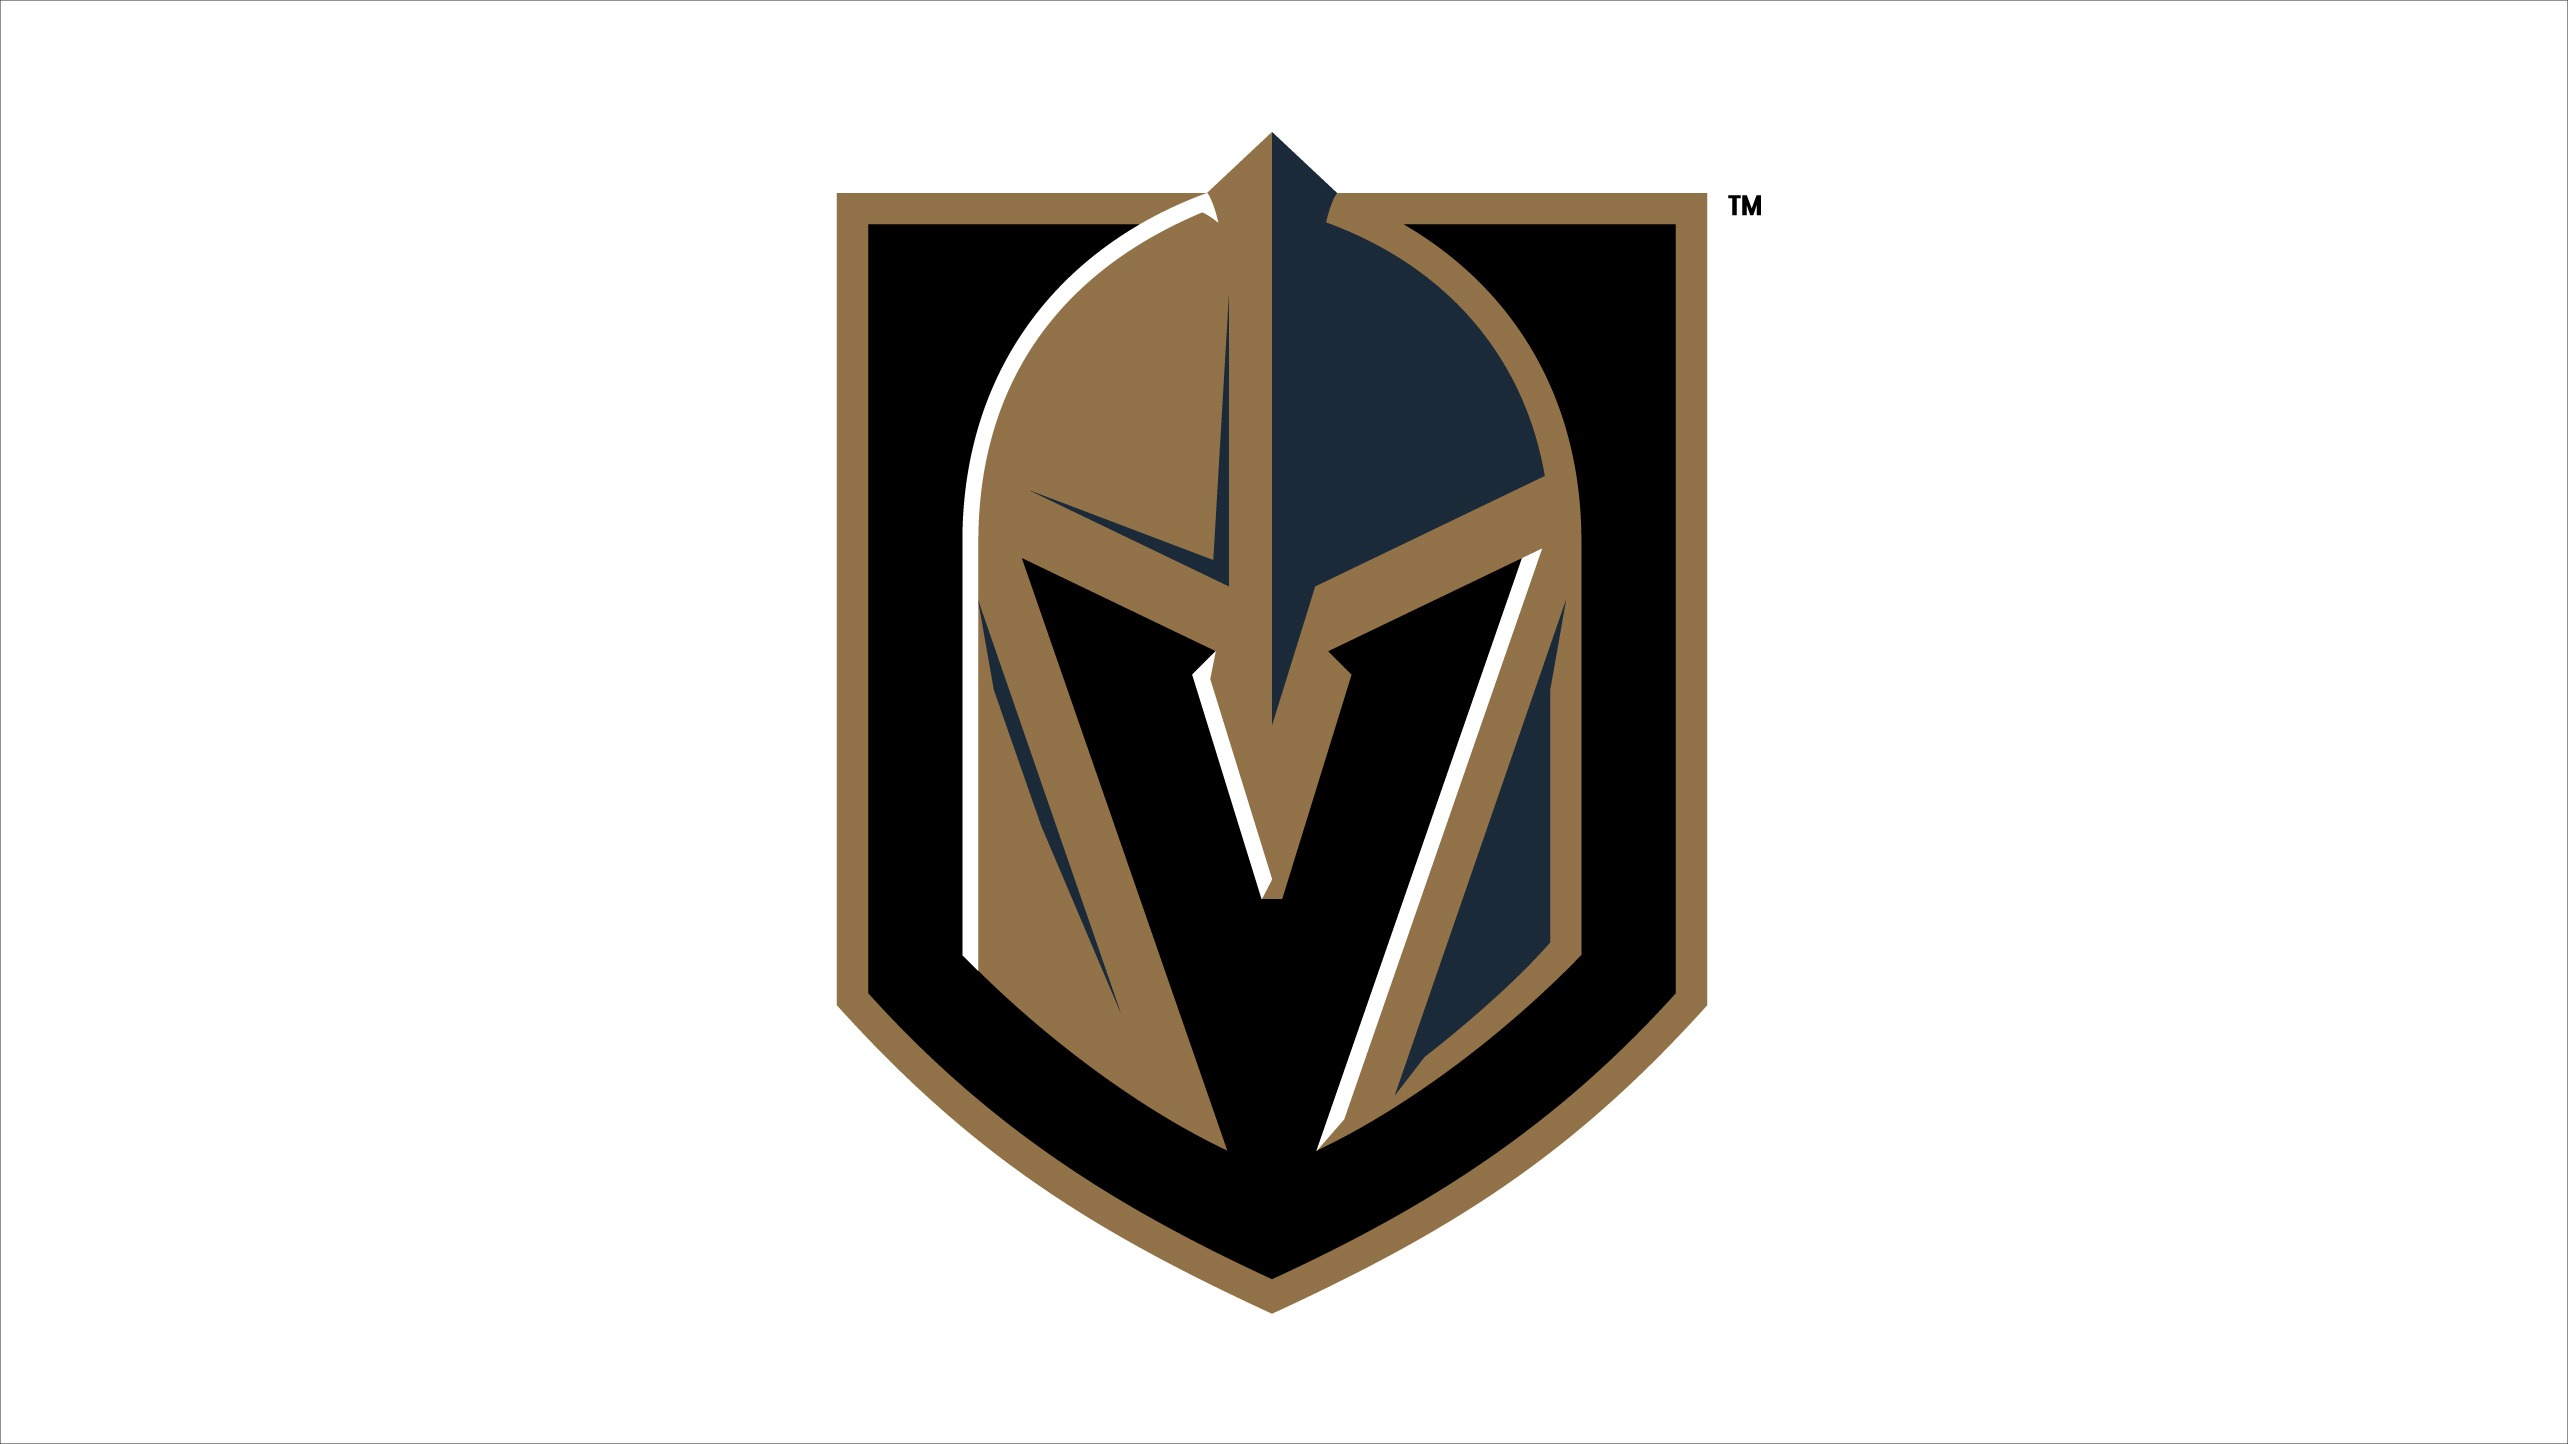 Full Vegas Golden Knights 2023-24 season schedule unveiled